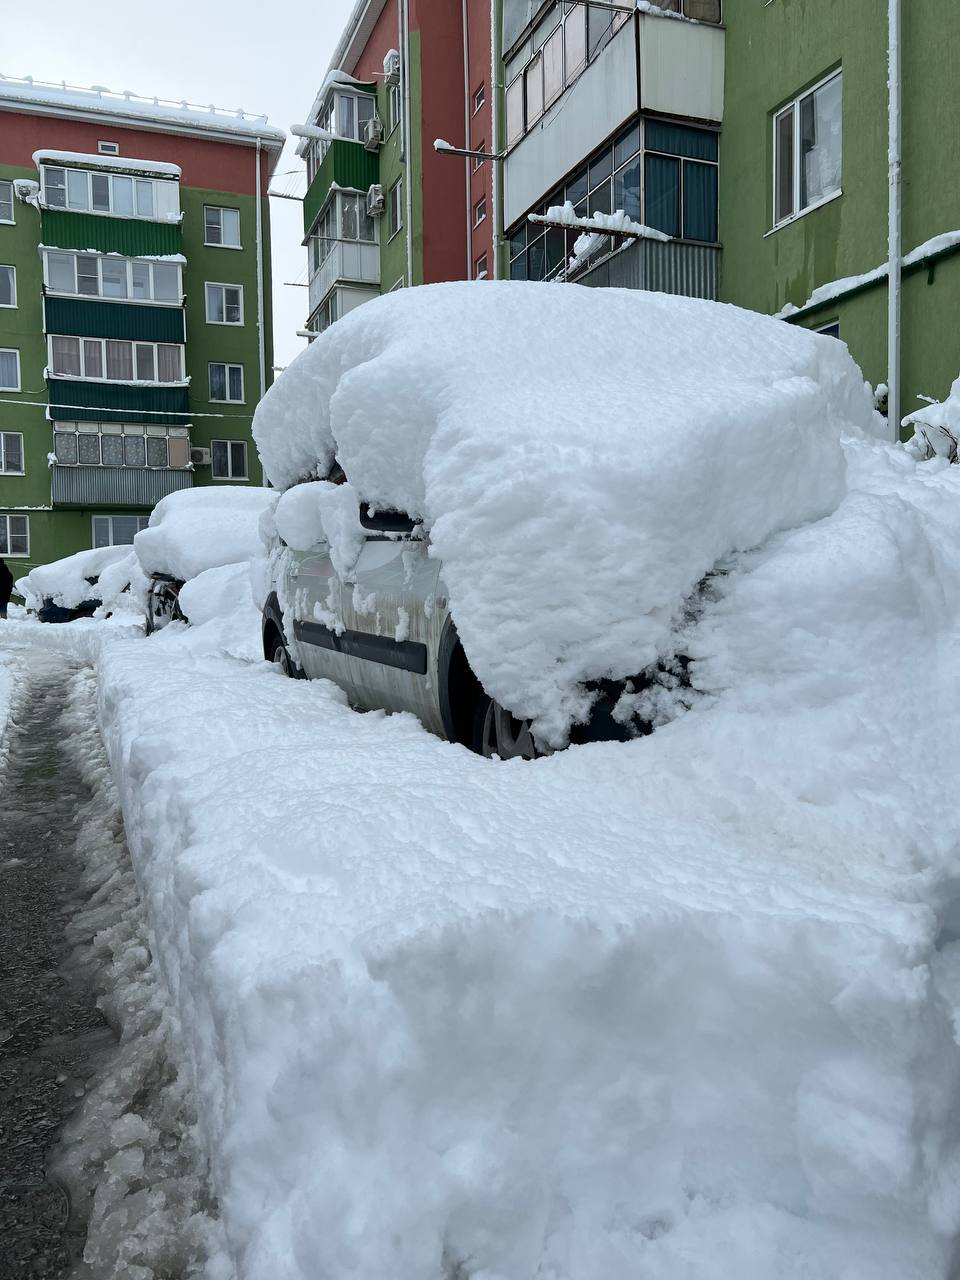 Снегопад в Краснодаре